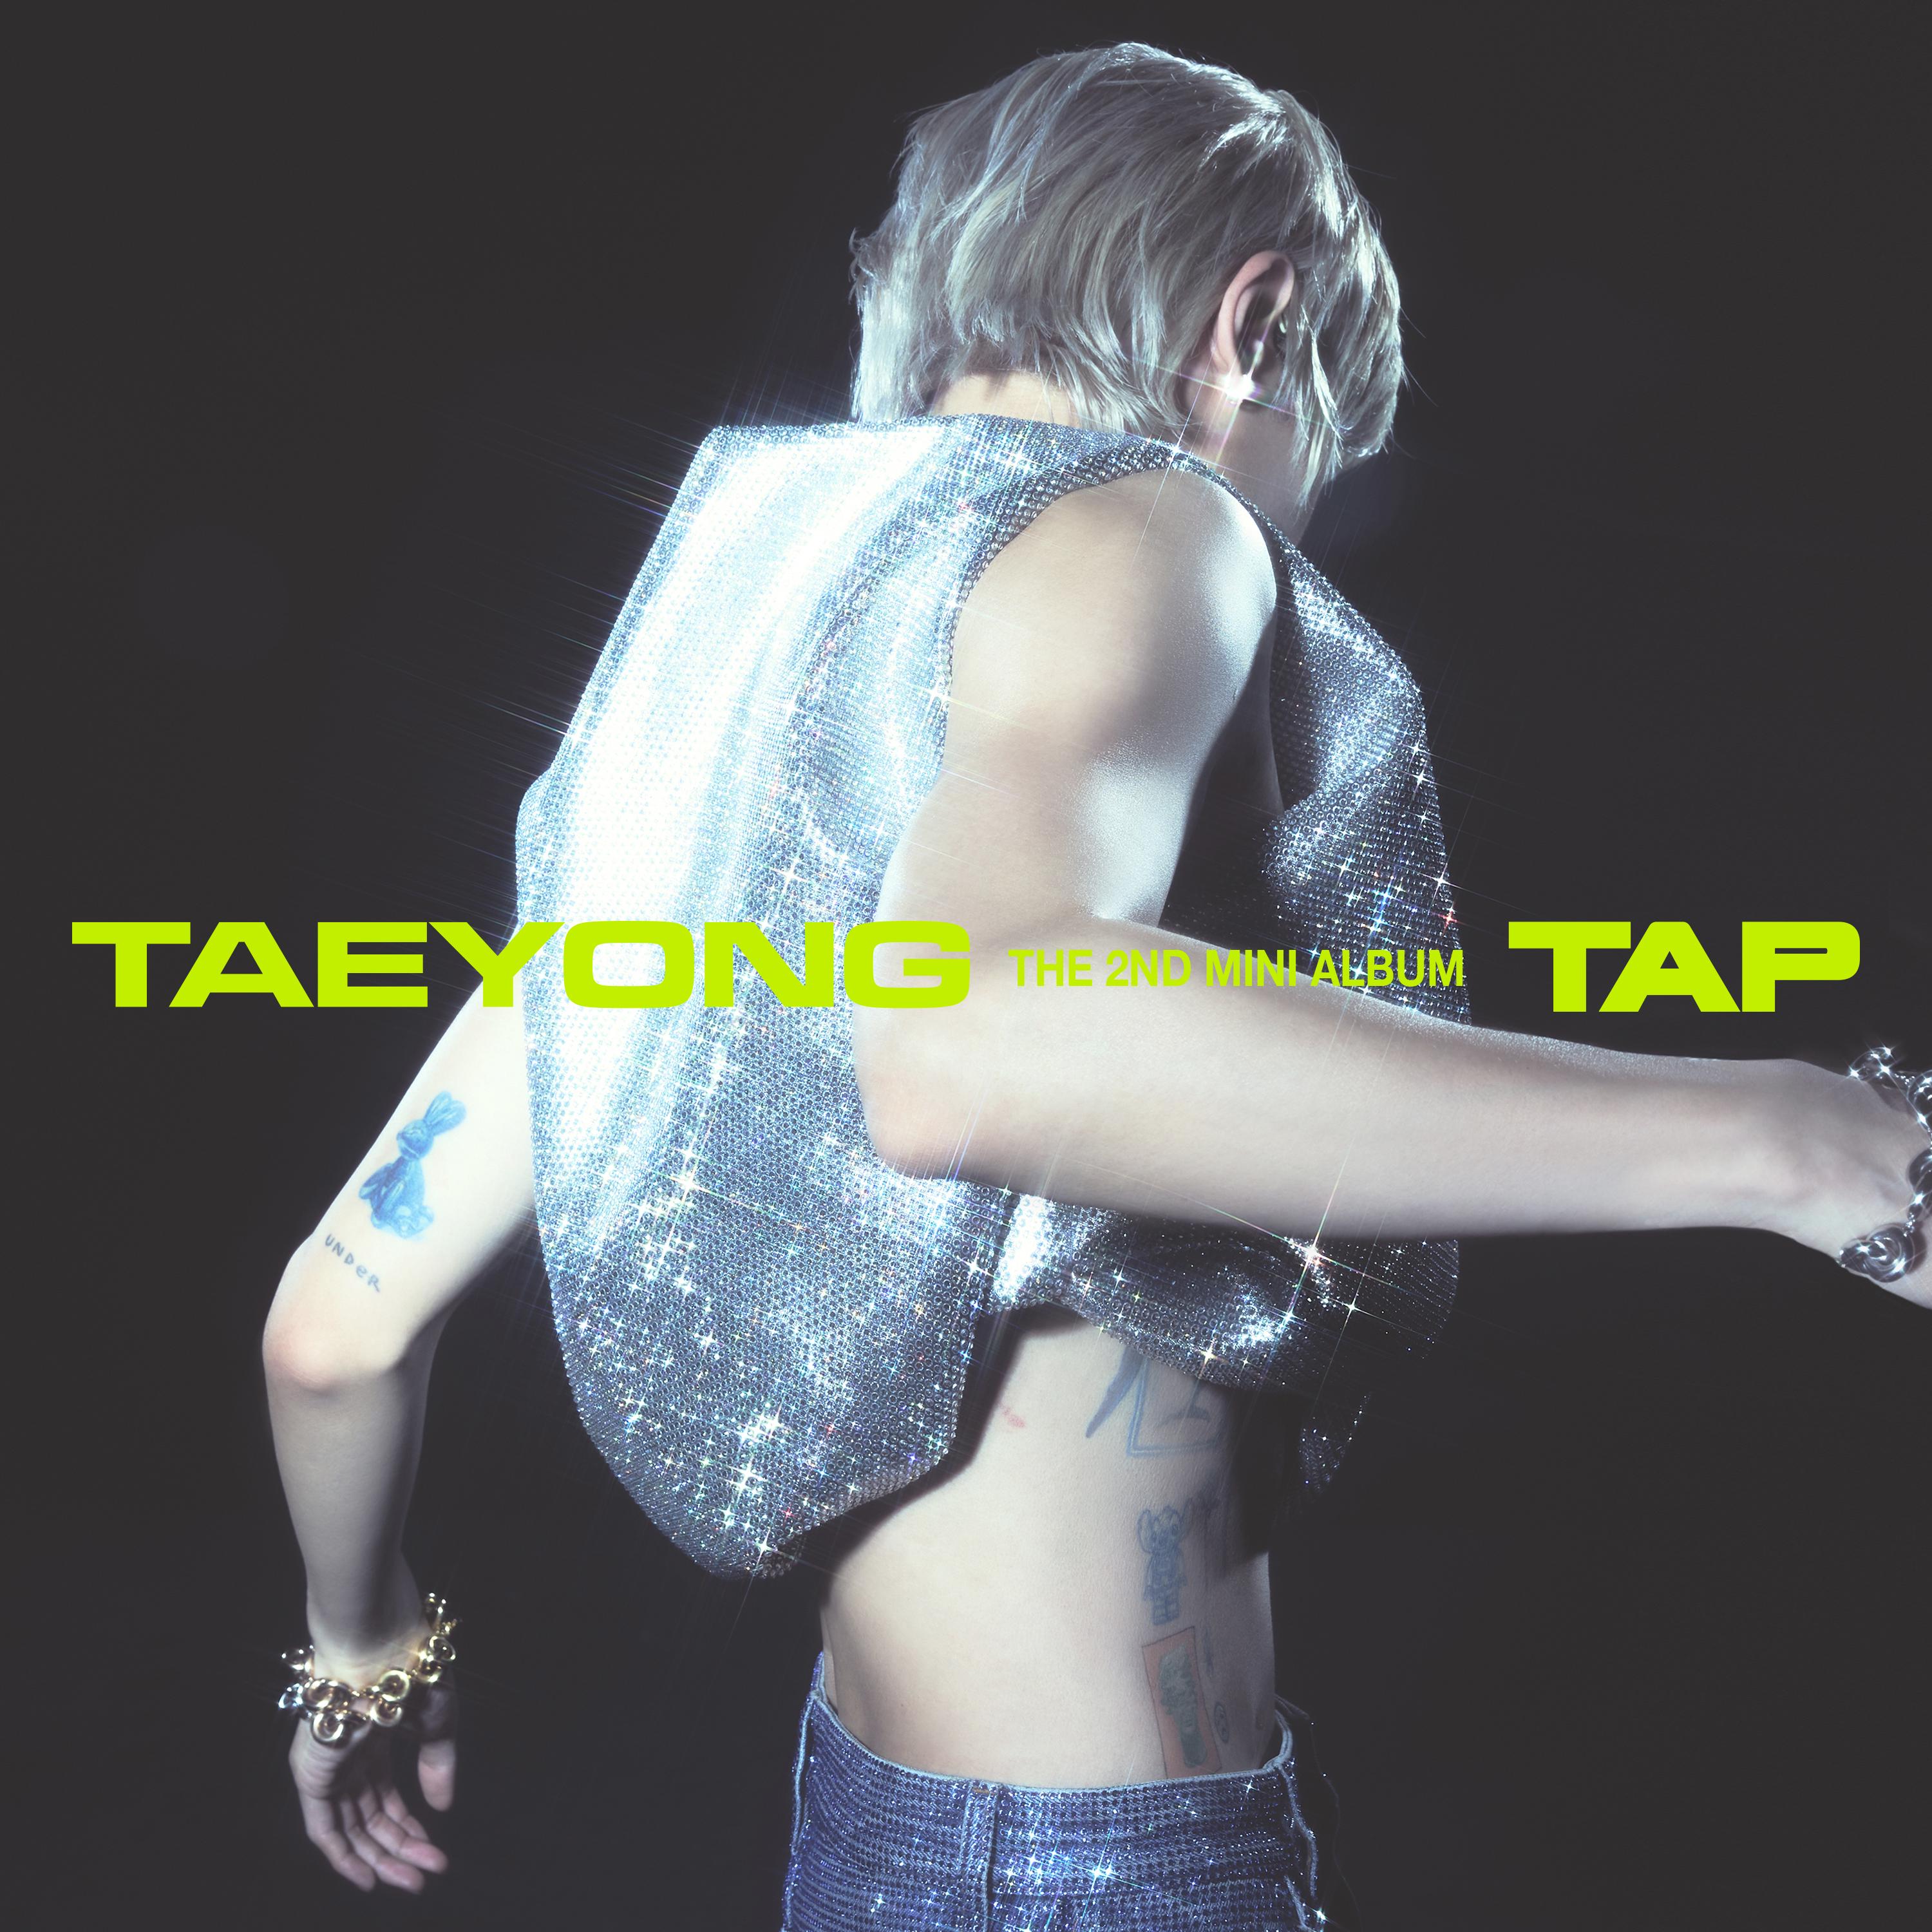 TAEYONG Moon Tour cover artwork